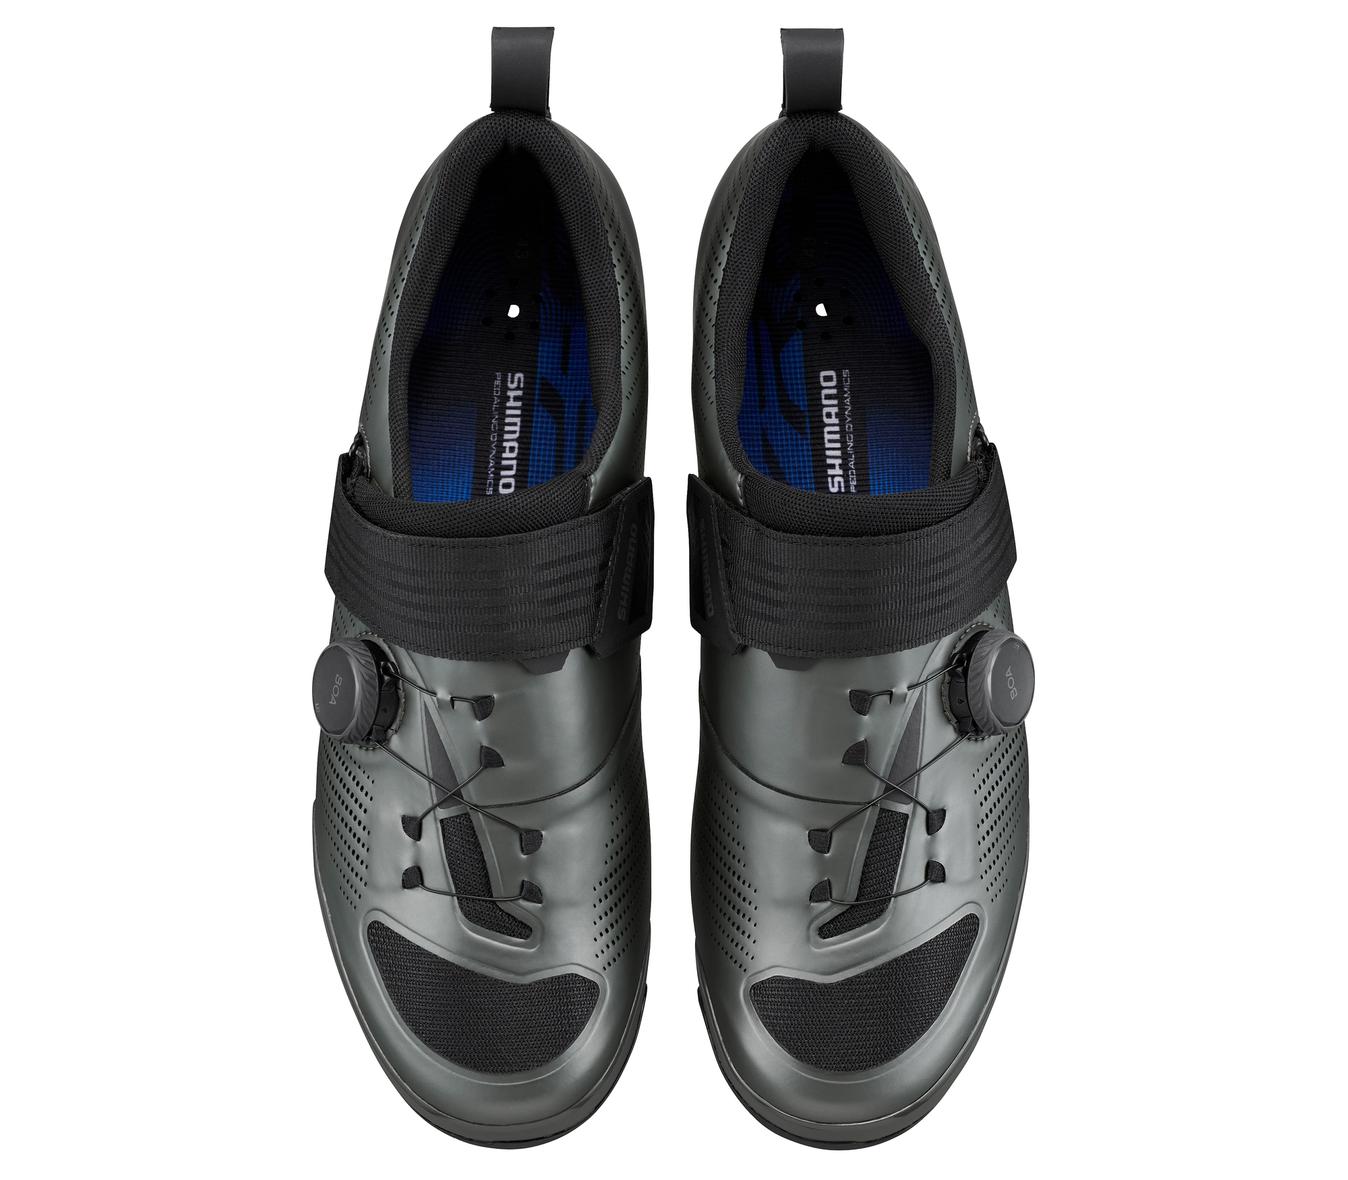 BOA dials come to Shimano's triathlon shoes